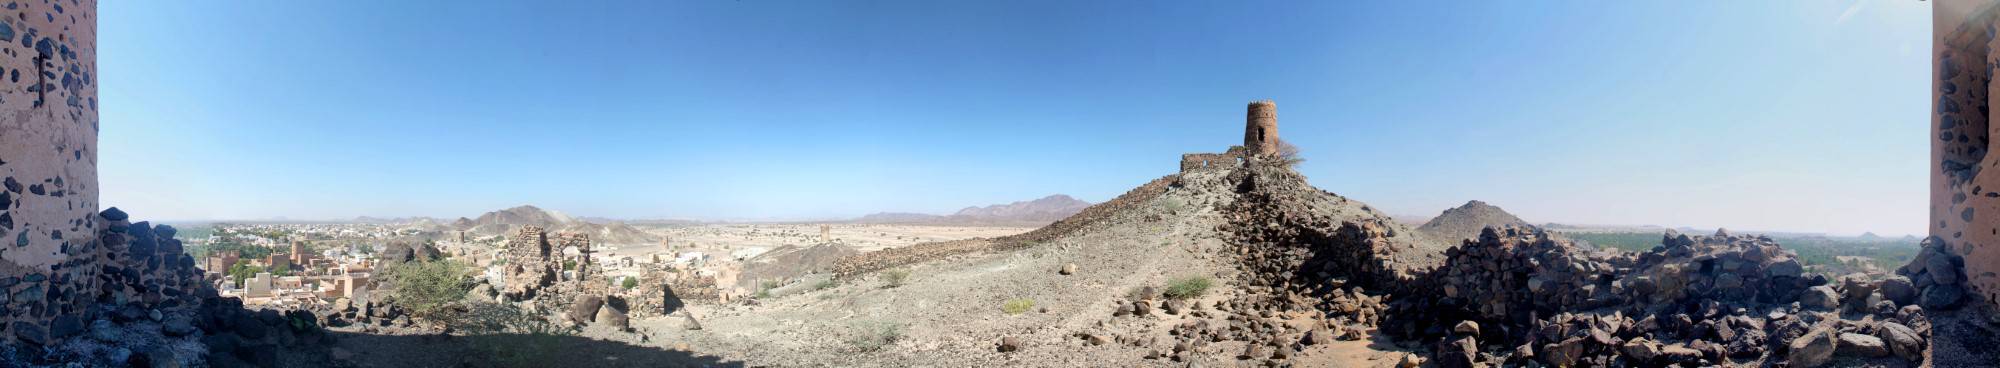 Panoramic view of the Hisn al-Mudayrib